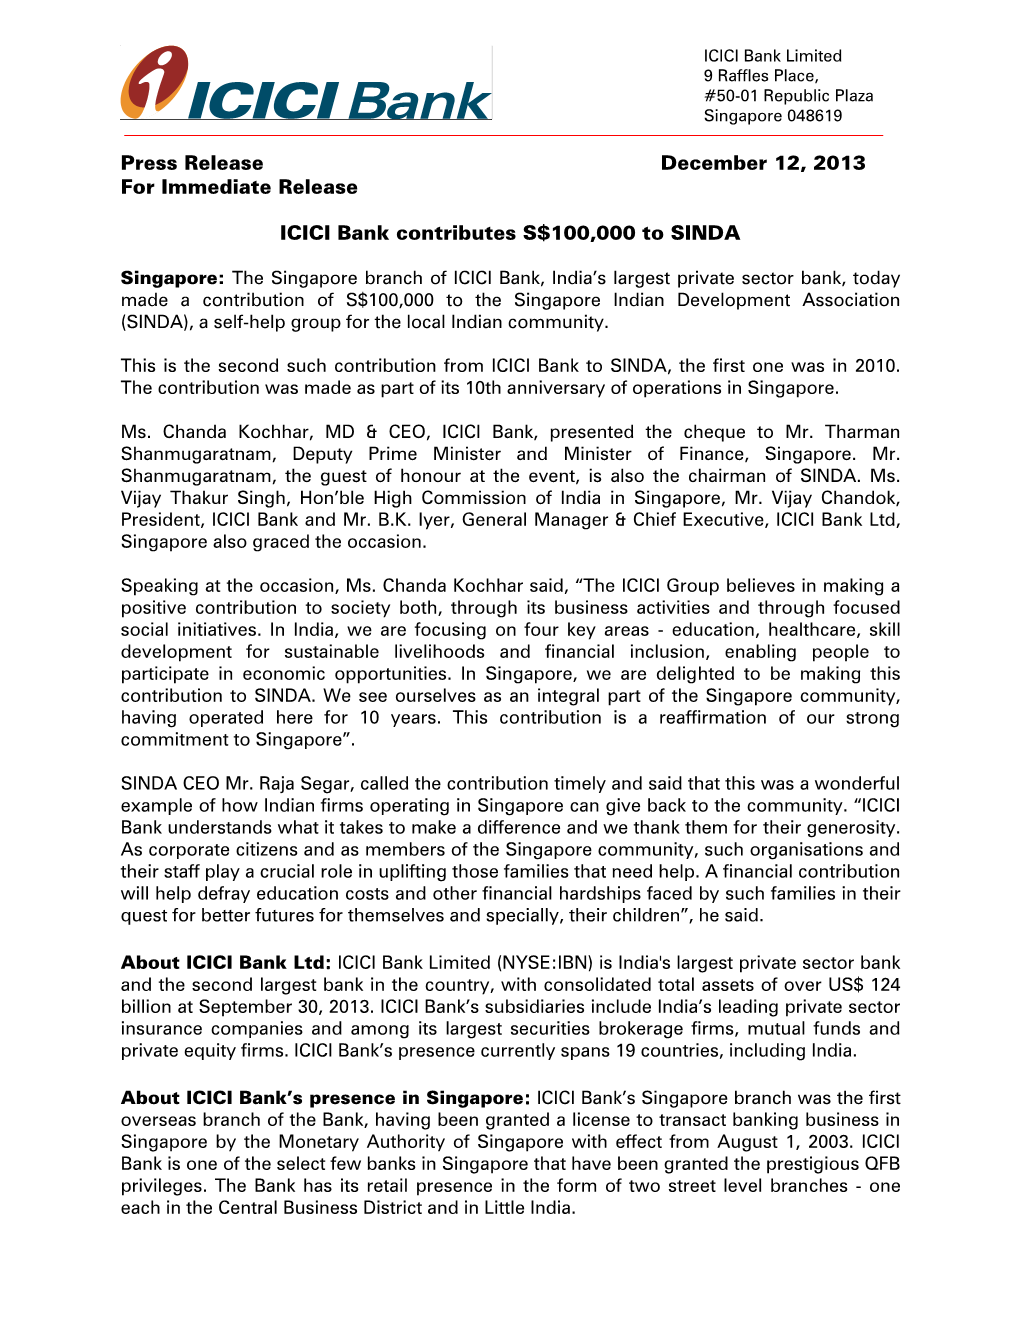 Press Release December 12, 2013 for Immediate Release